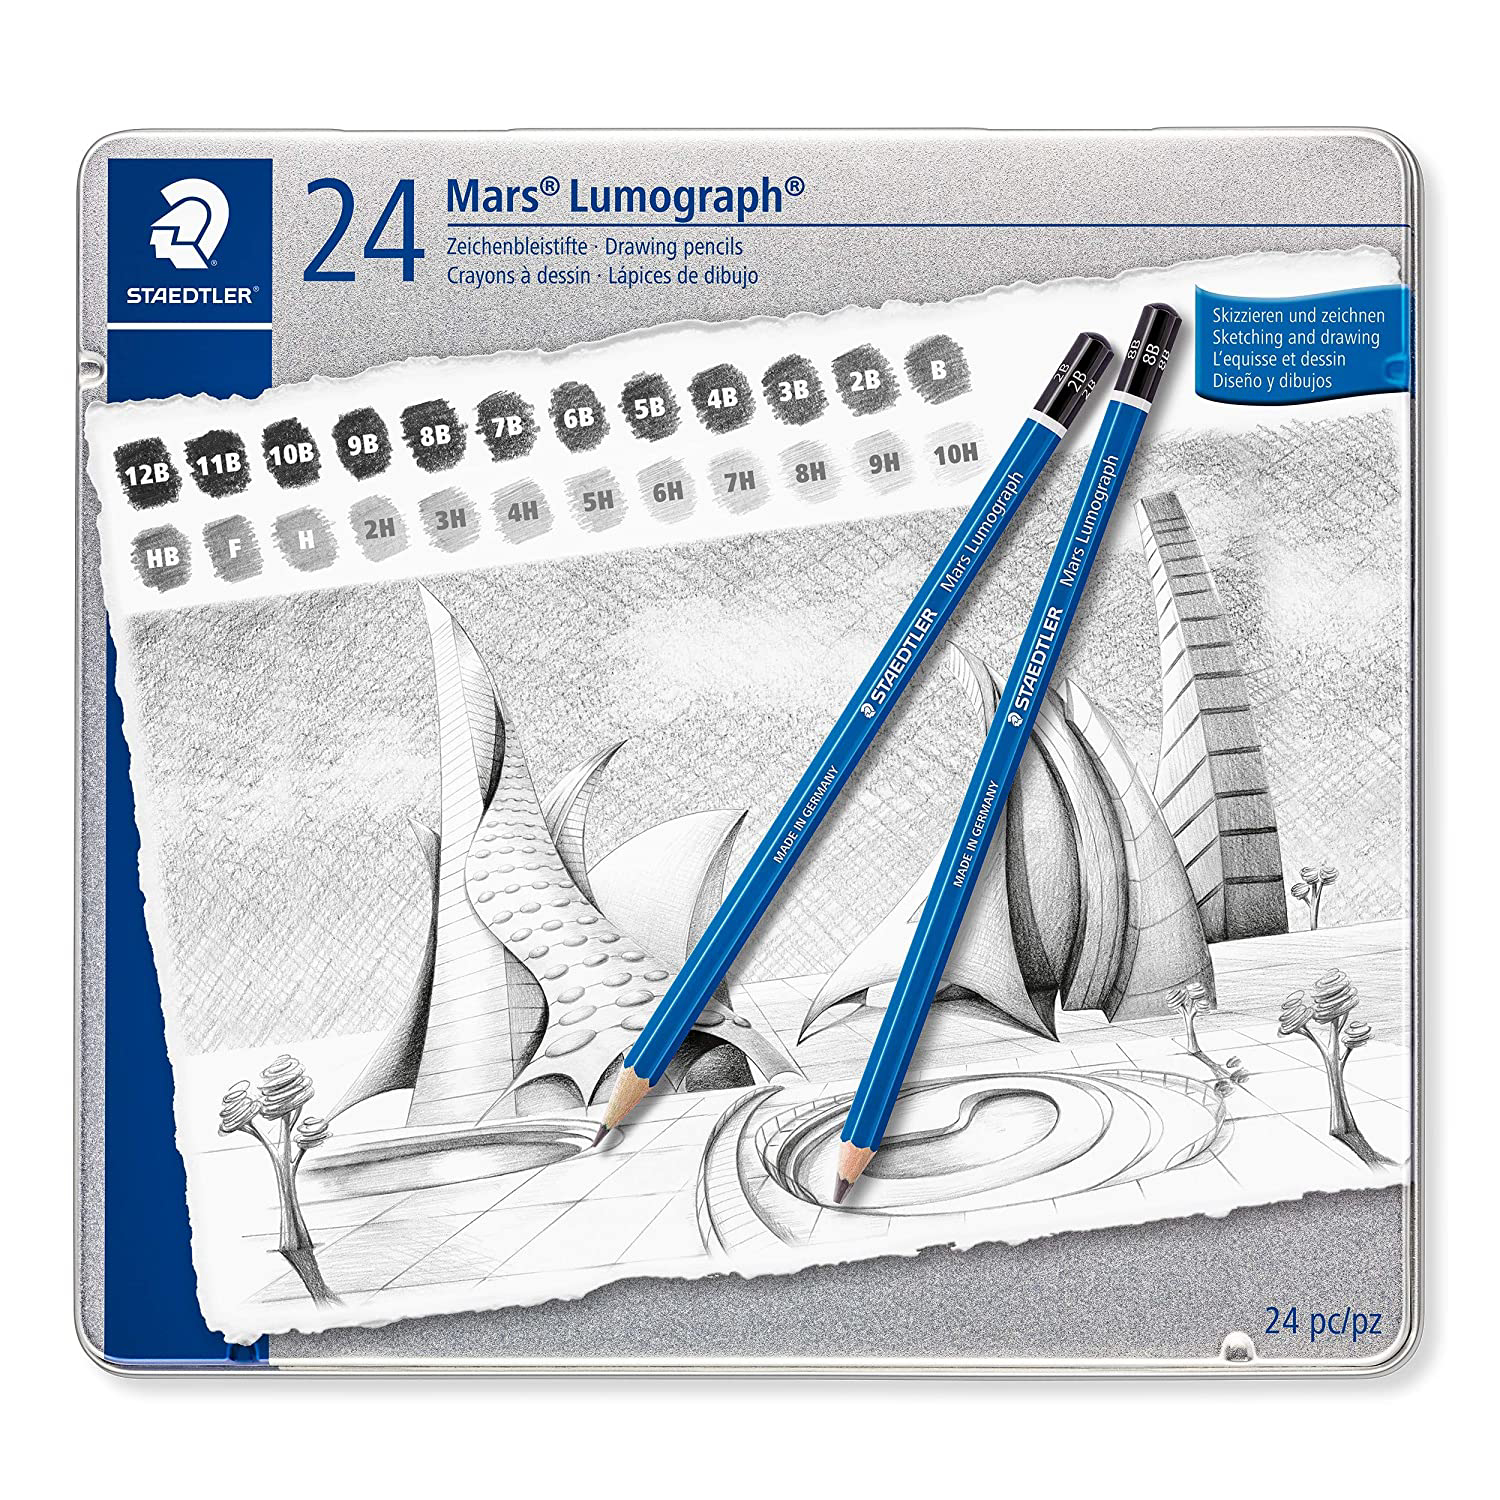 Staedtler Mars Lumograph Artist Pencil Set - Pack of 24